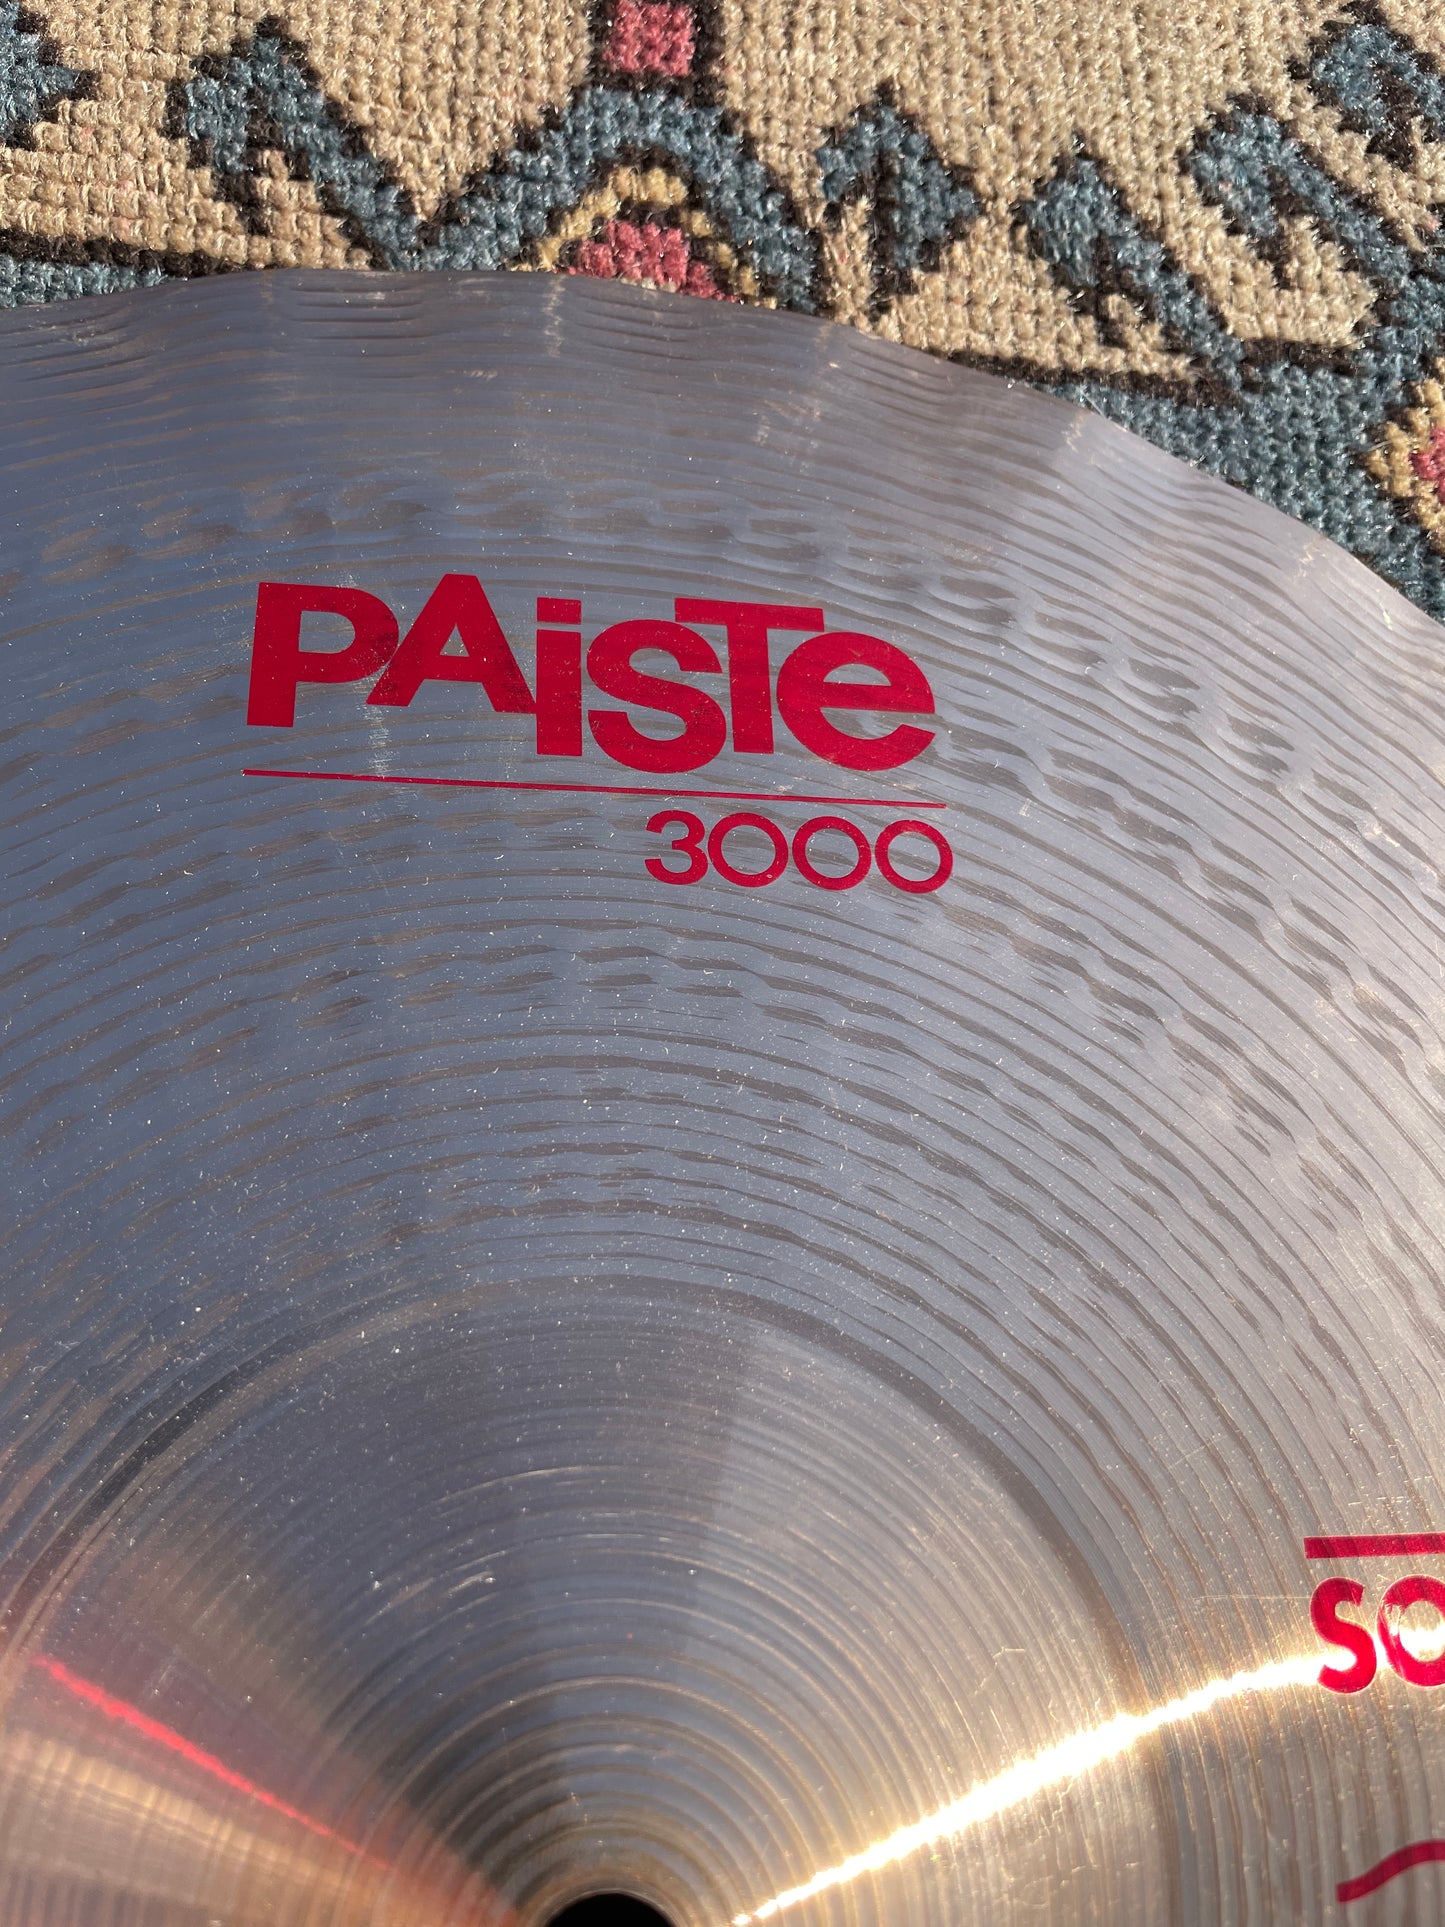 14" Paiste 3000 Sound Edge Hi-Hat Bottom Single Cymbal 1196g